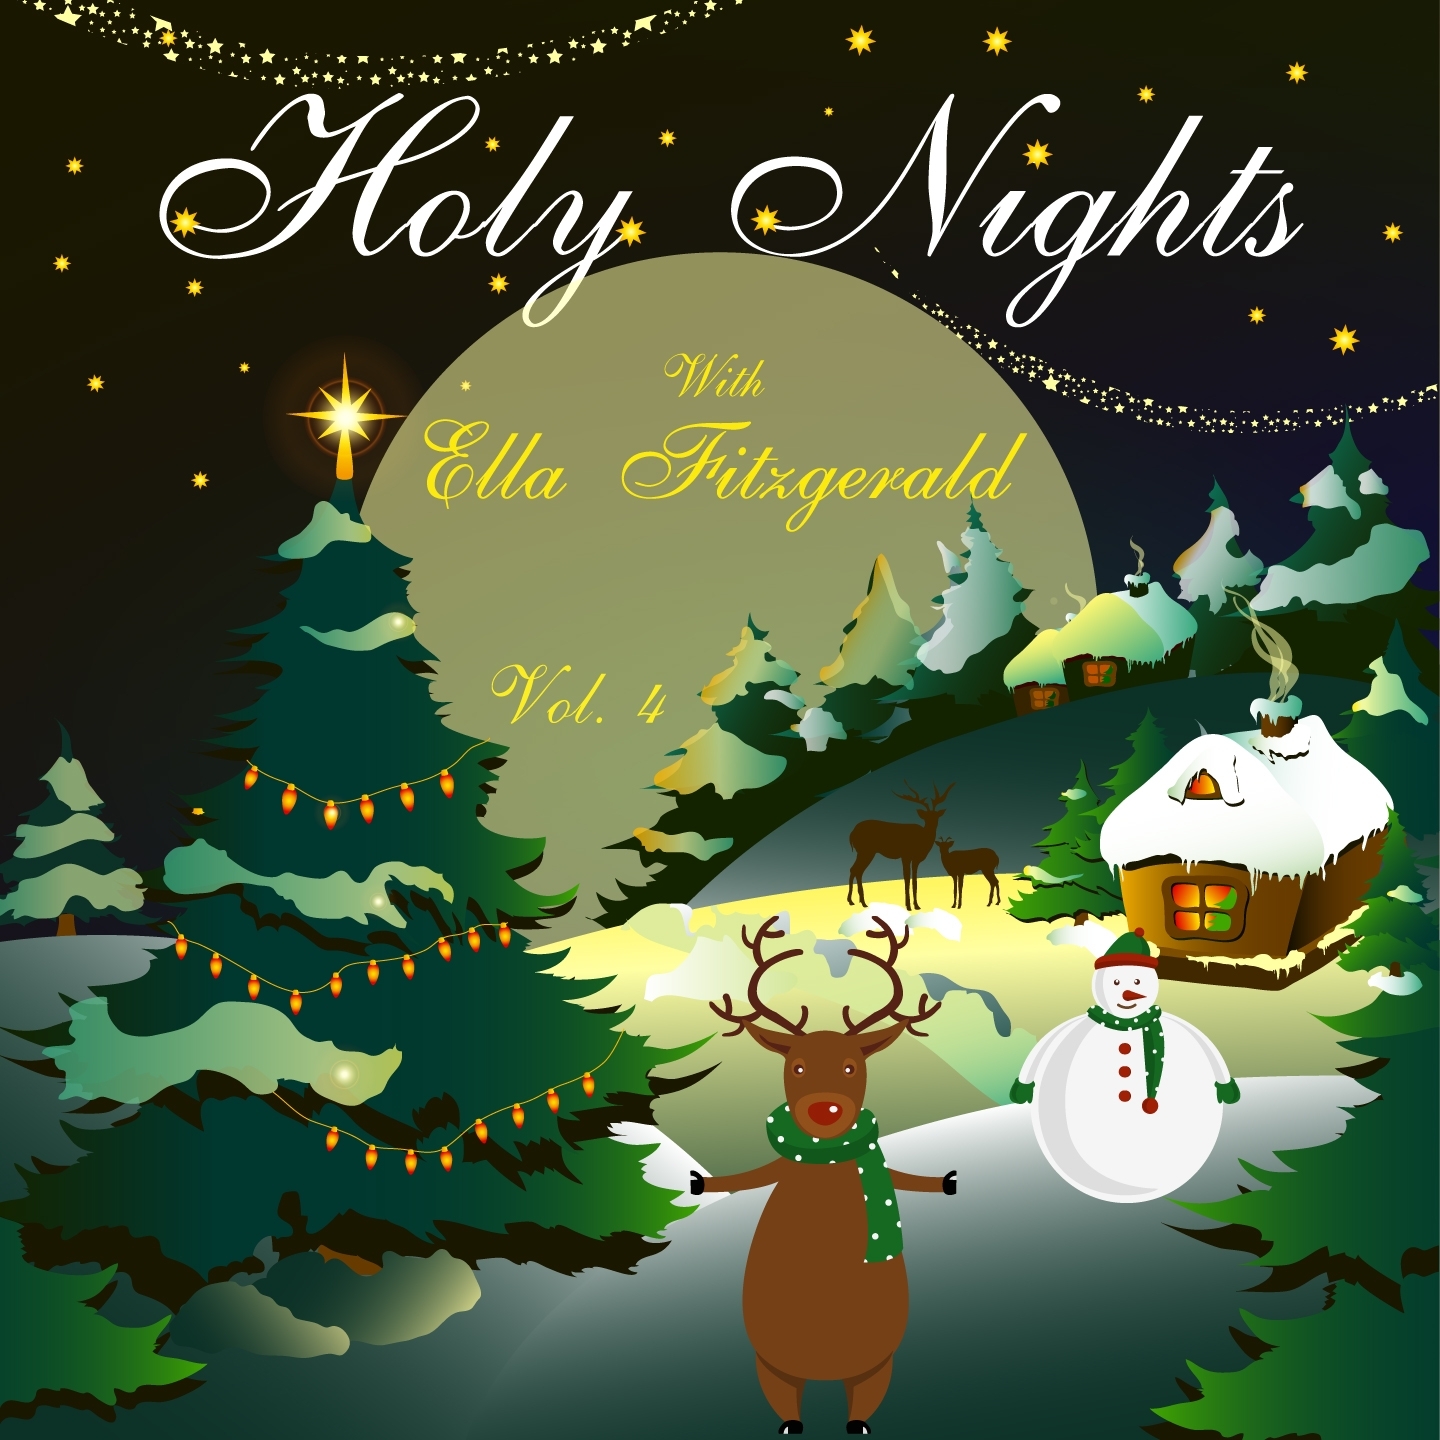 Holy Nights With Ella Fitzgerald, Vol. 4